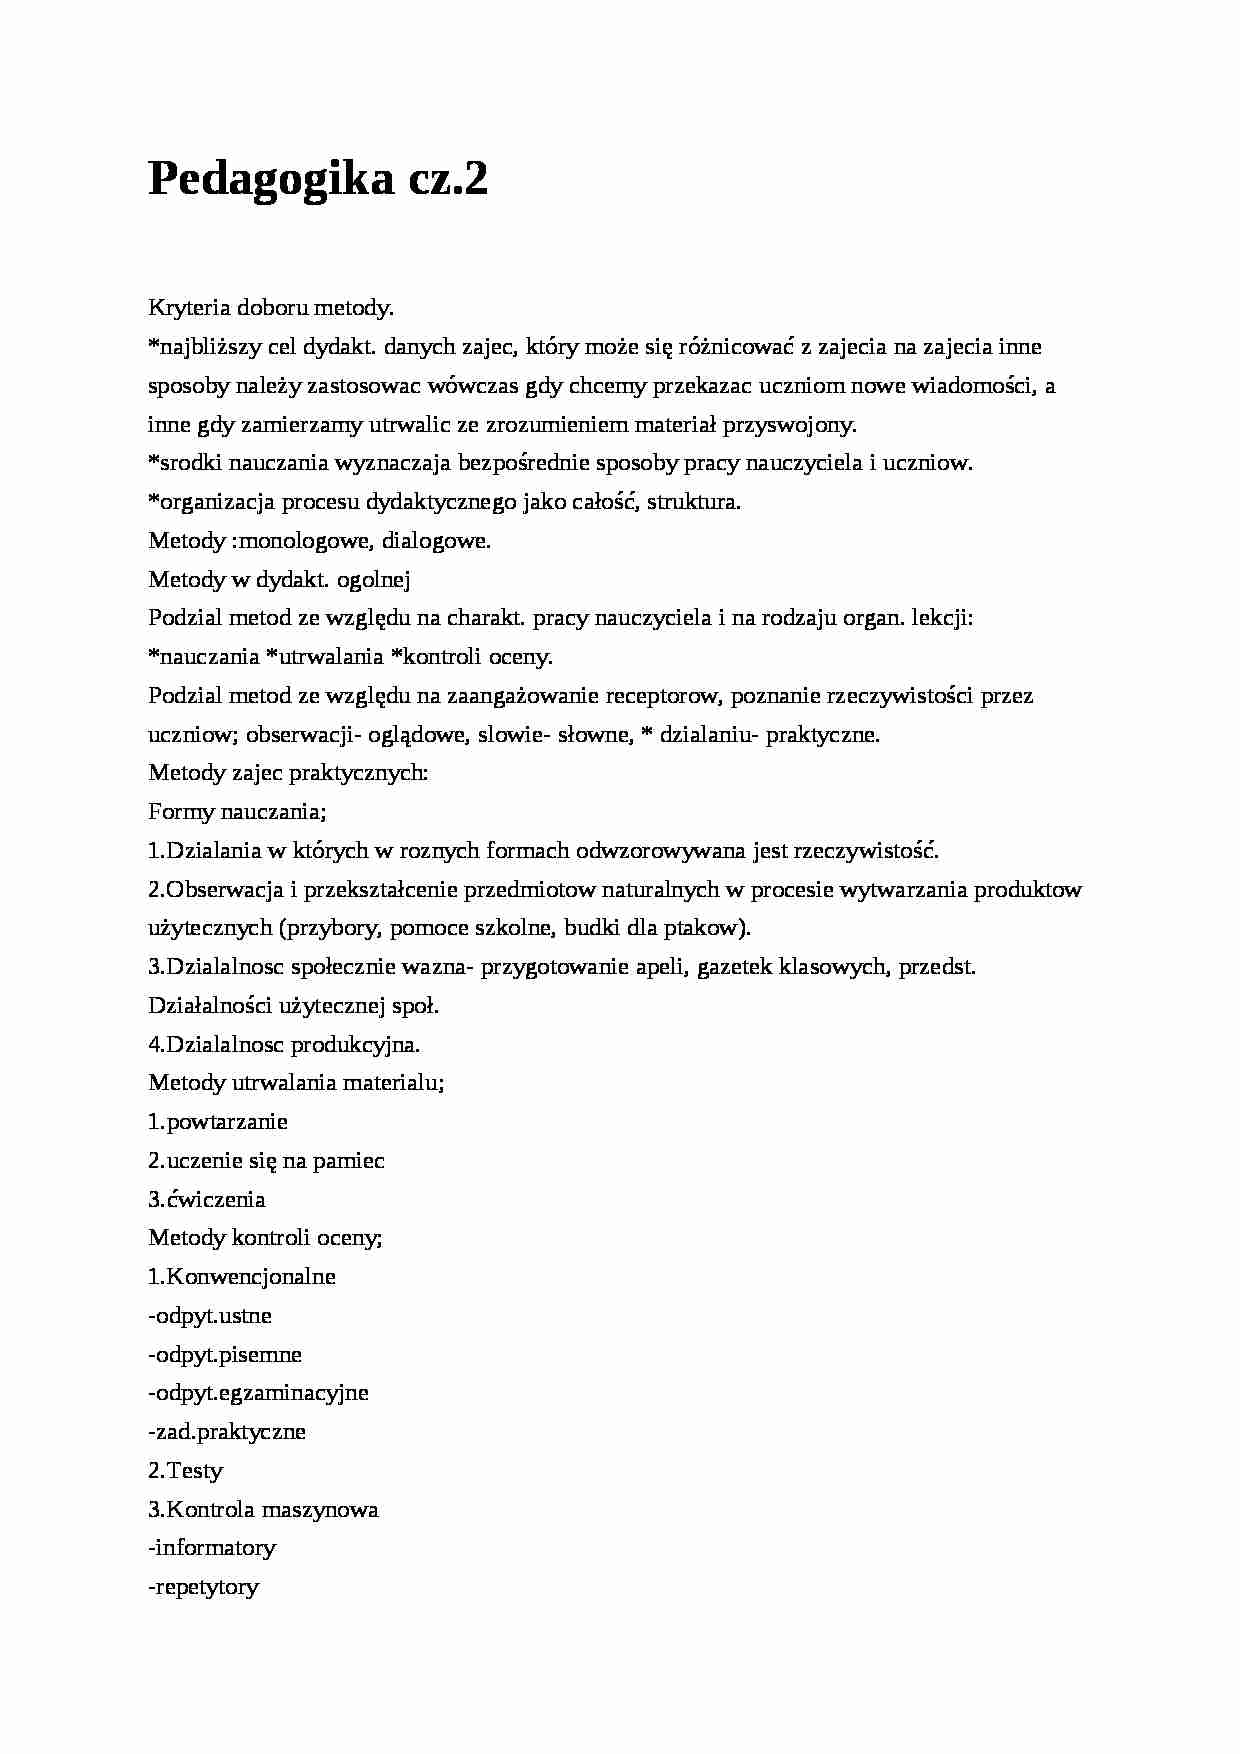 Pedagogika cz- pedagogika - strona 1